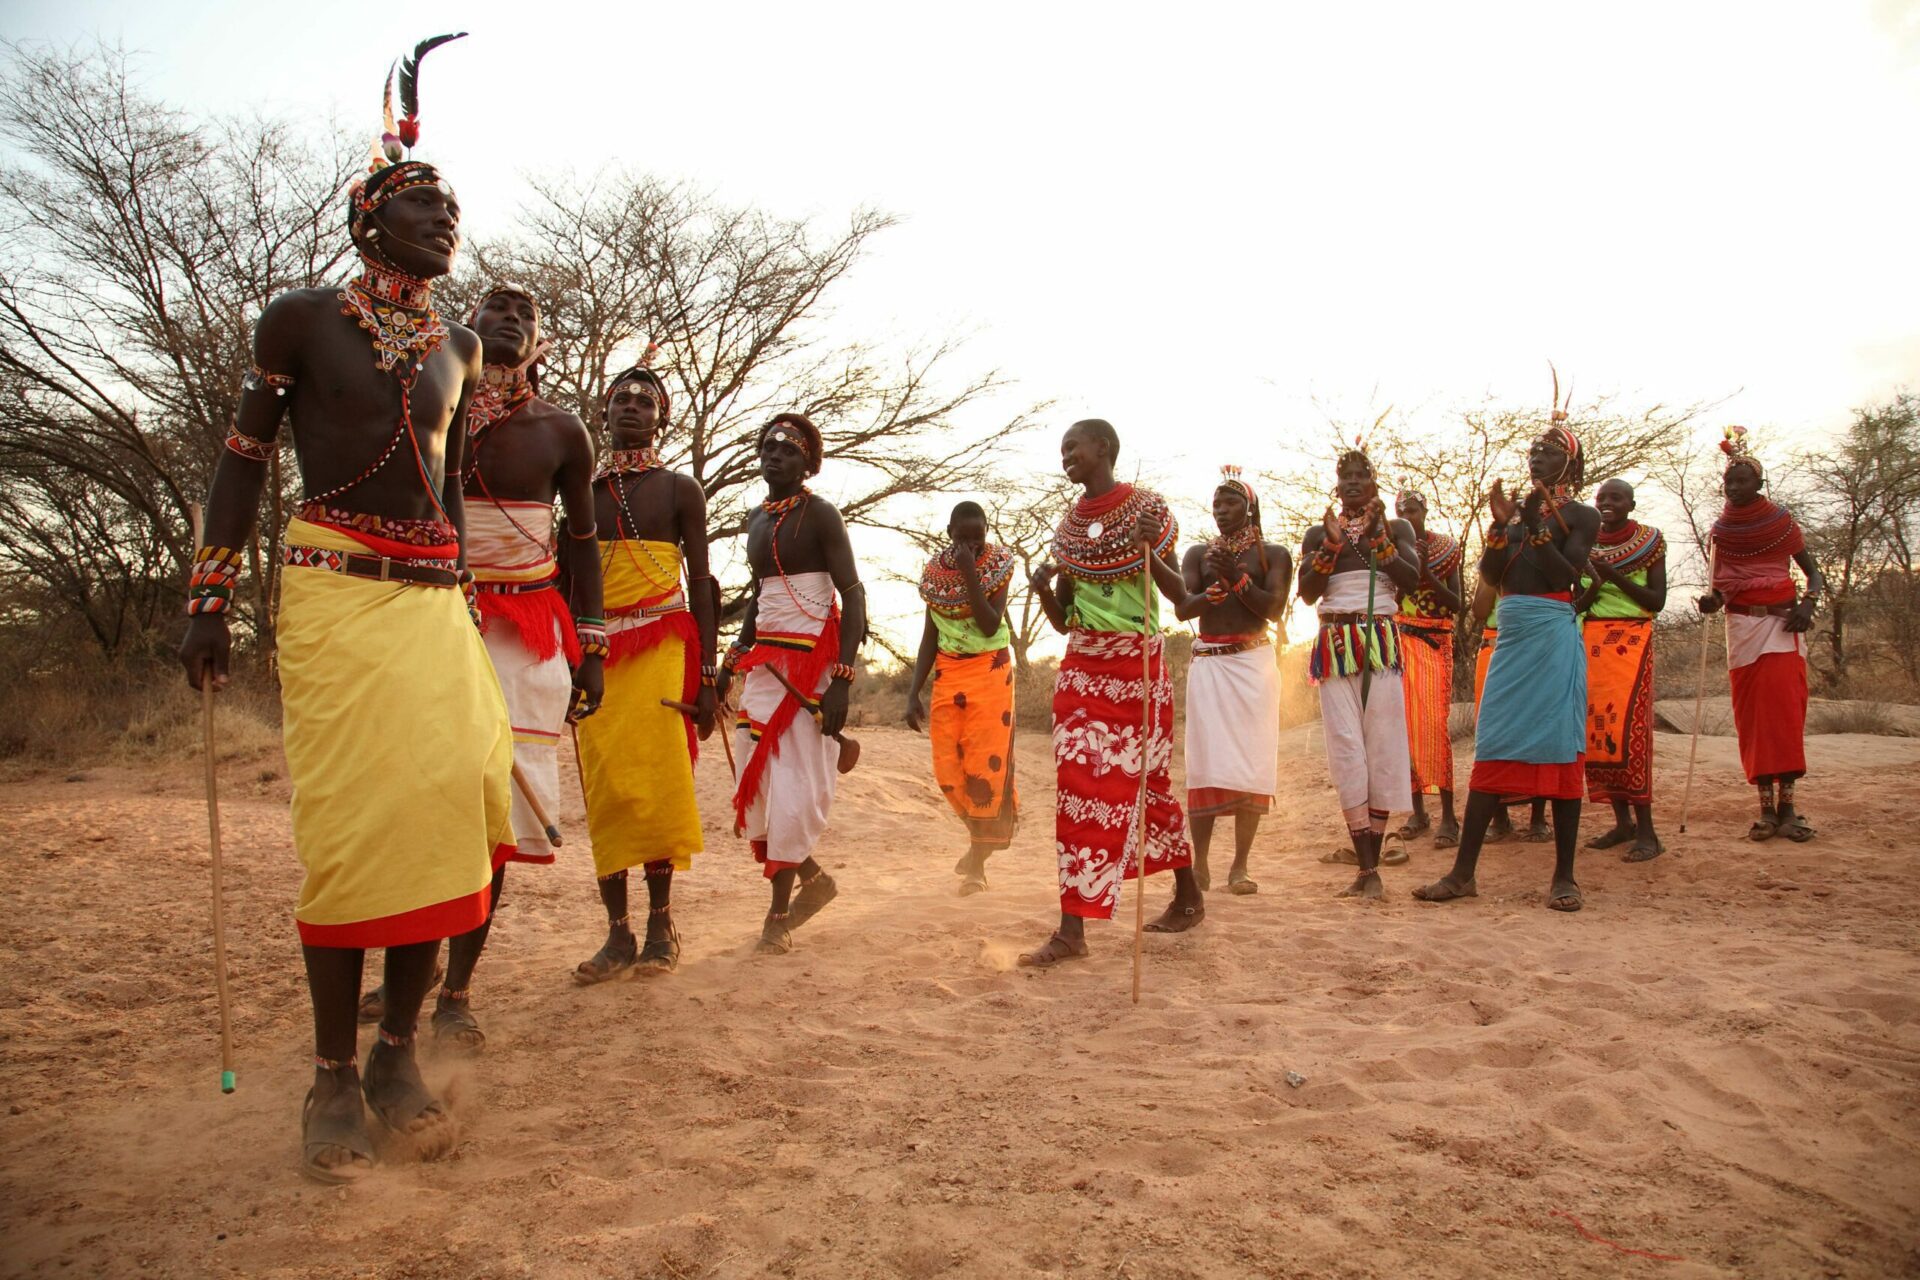 fly-in Kenya Safari visits Samburu tribesmen gathering